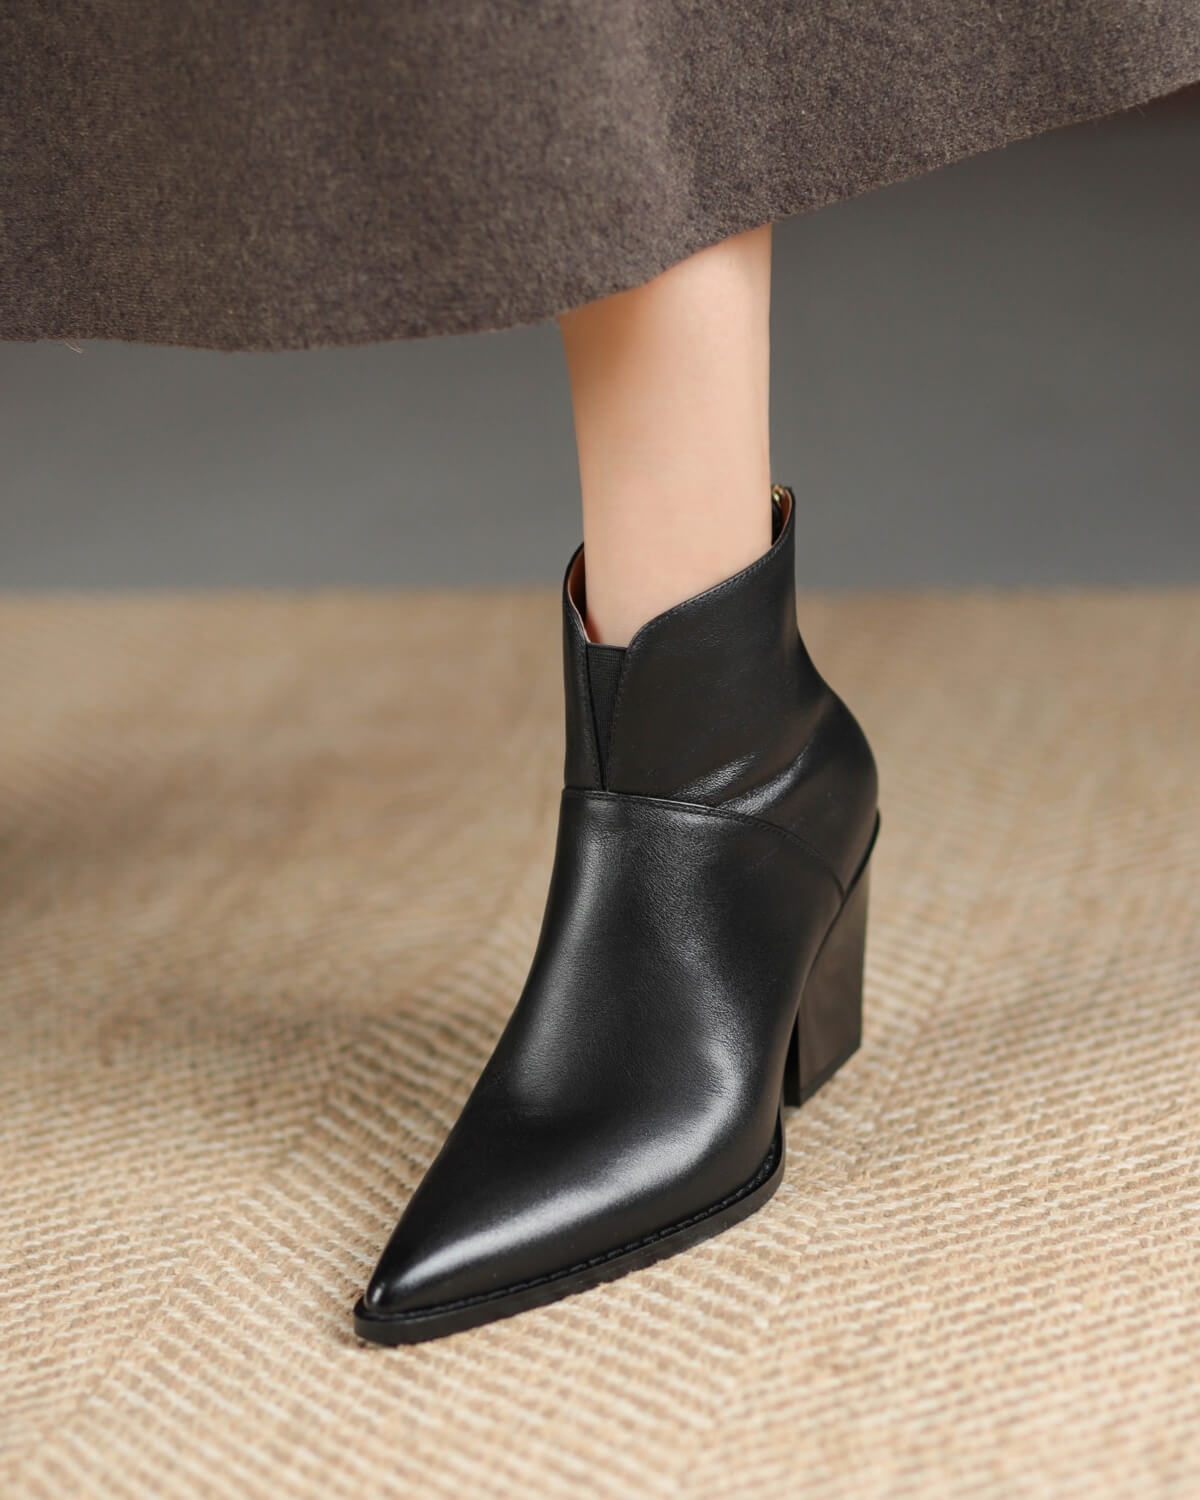 Meru-western-boots-black-leather-model